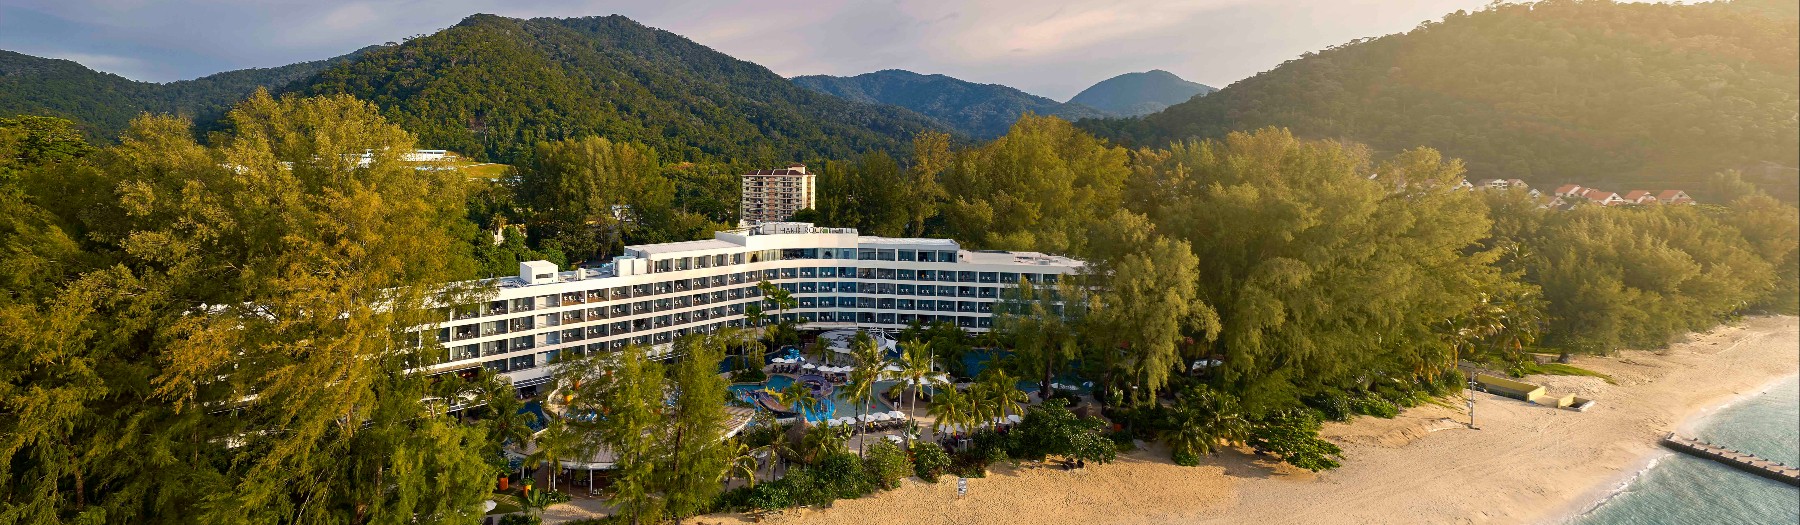 Hard Rock Hotel Penang-Web Banner-1800X525-Beach